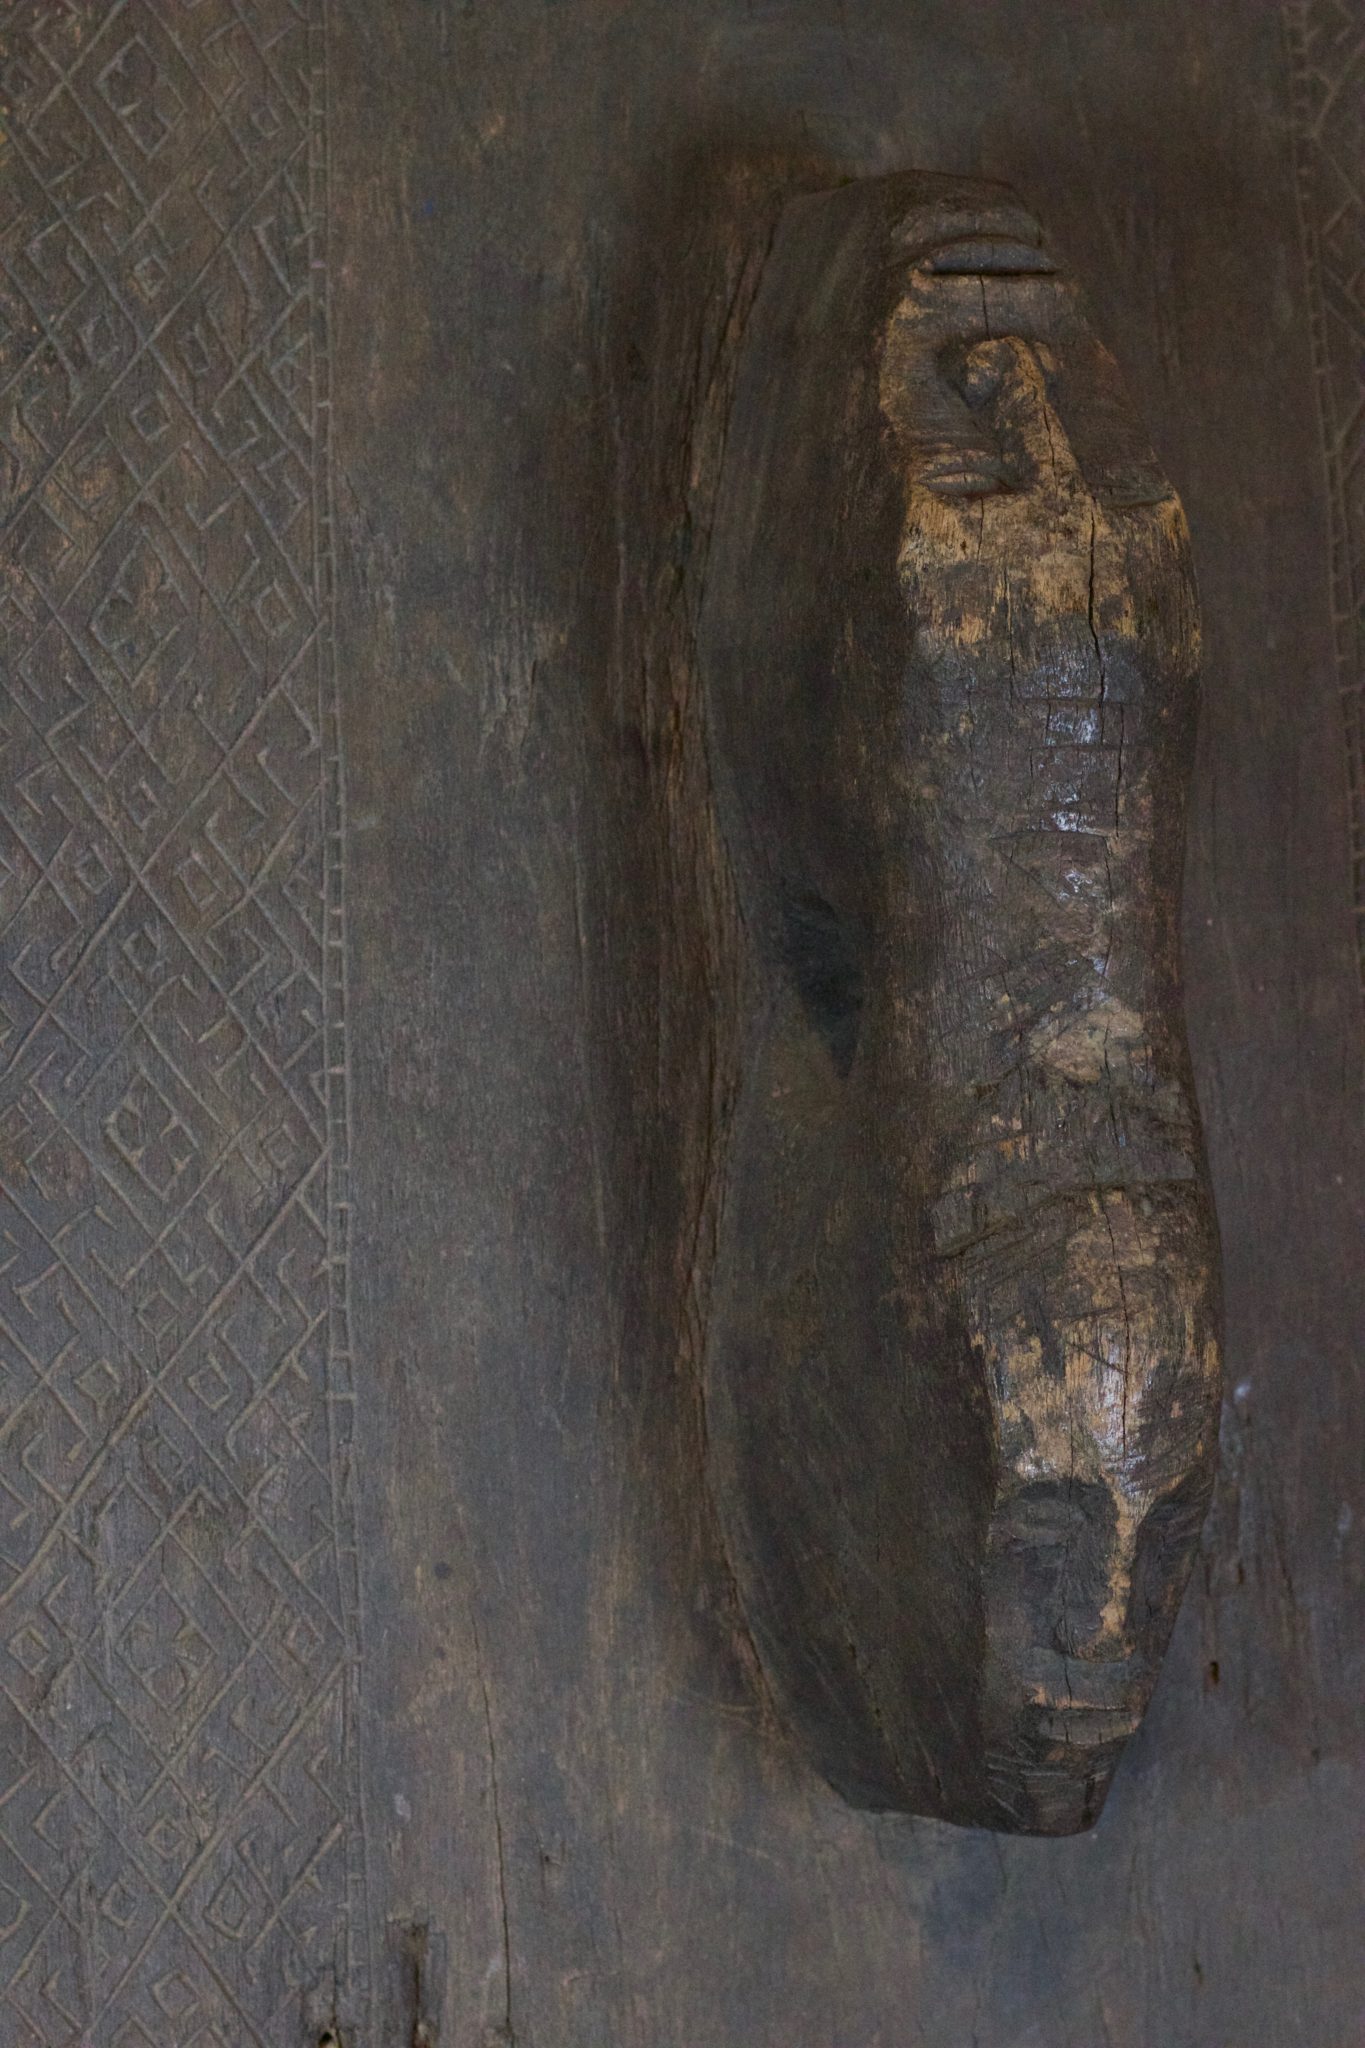 Handle Detail of Shaman Ritual Spirit Door (see previous image)